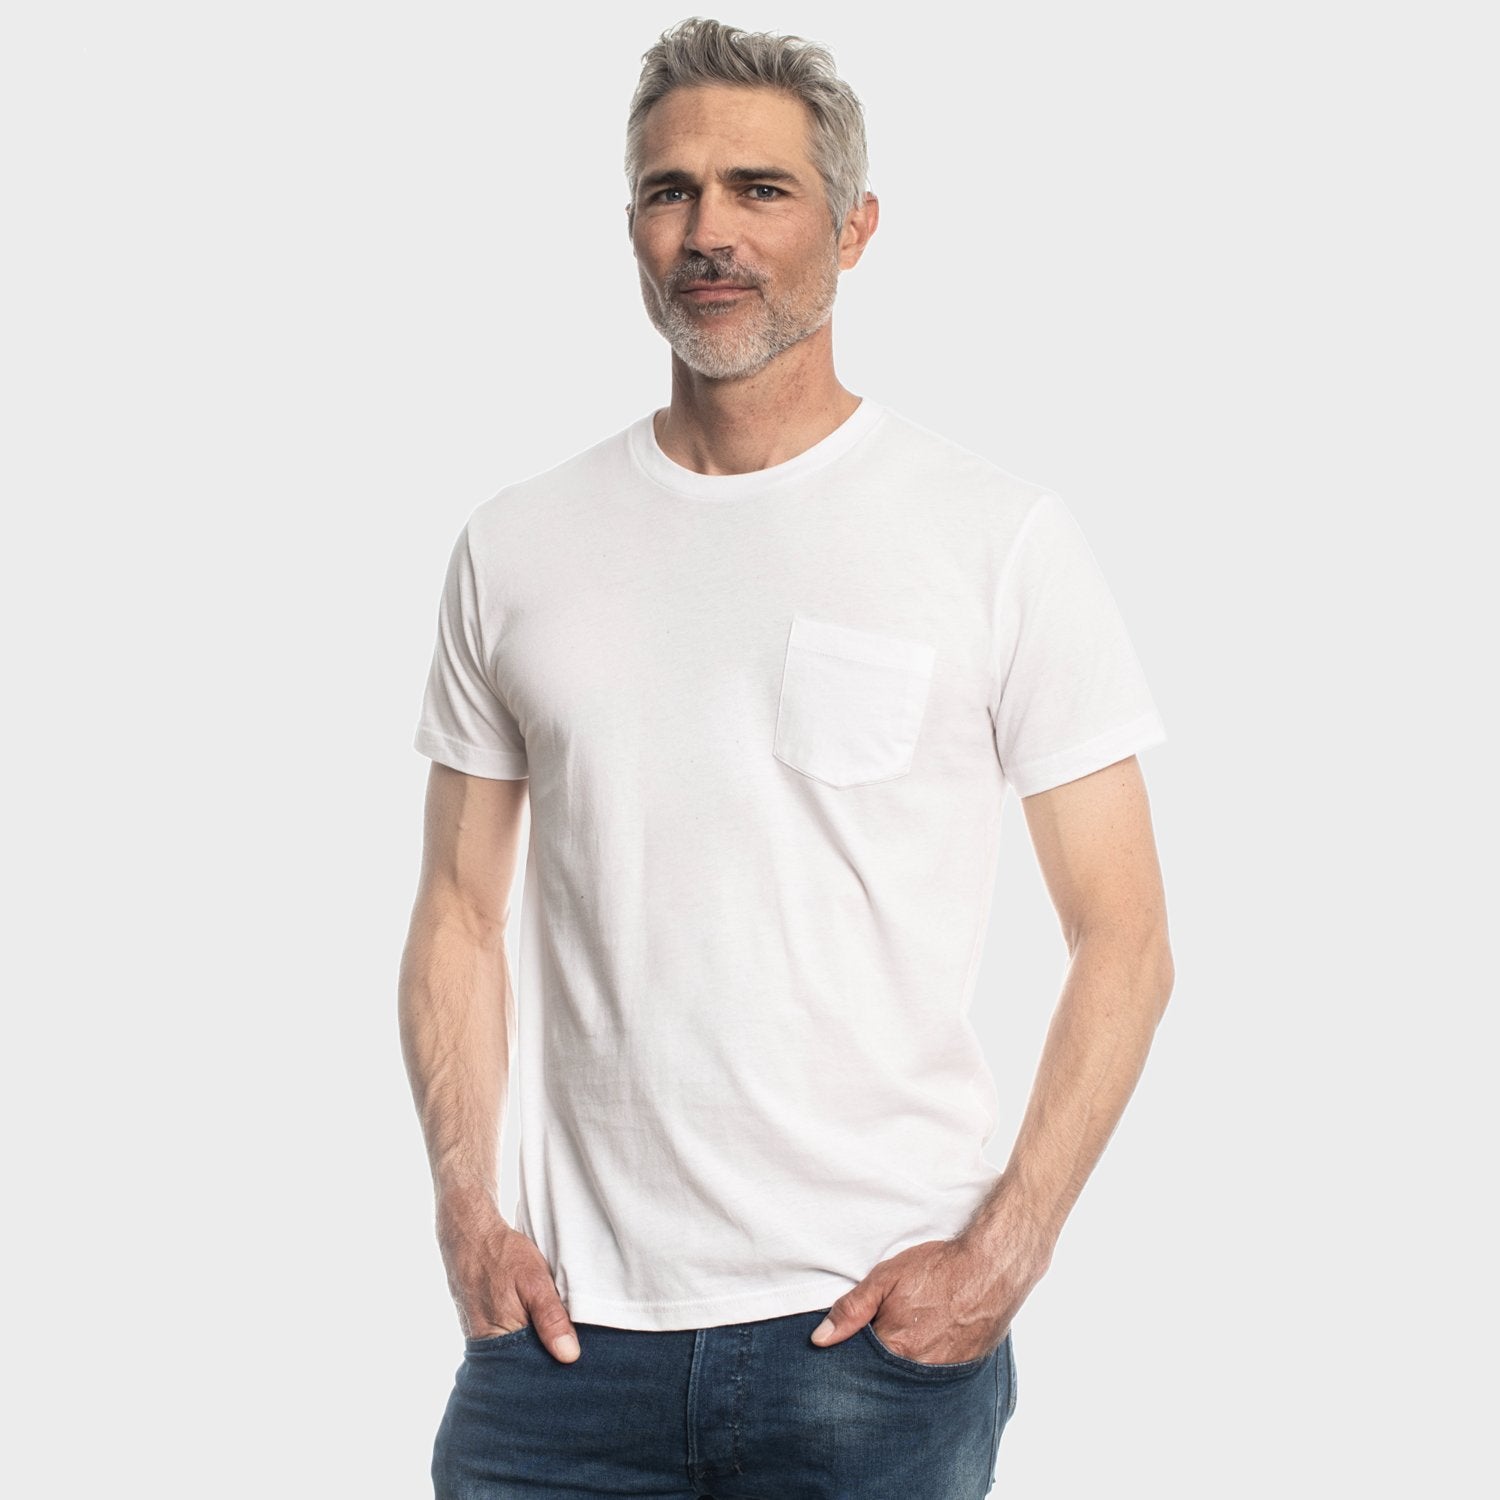 White T-Shirt With Pocket | Men's White Pocket T-Shirt | True Classic